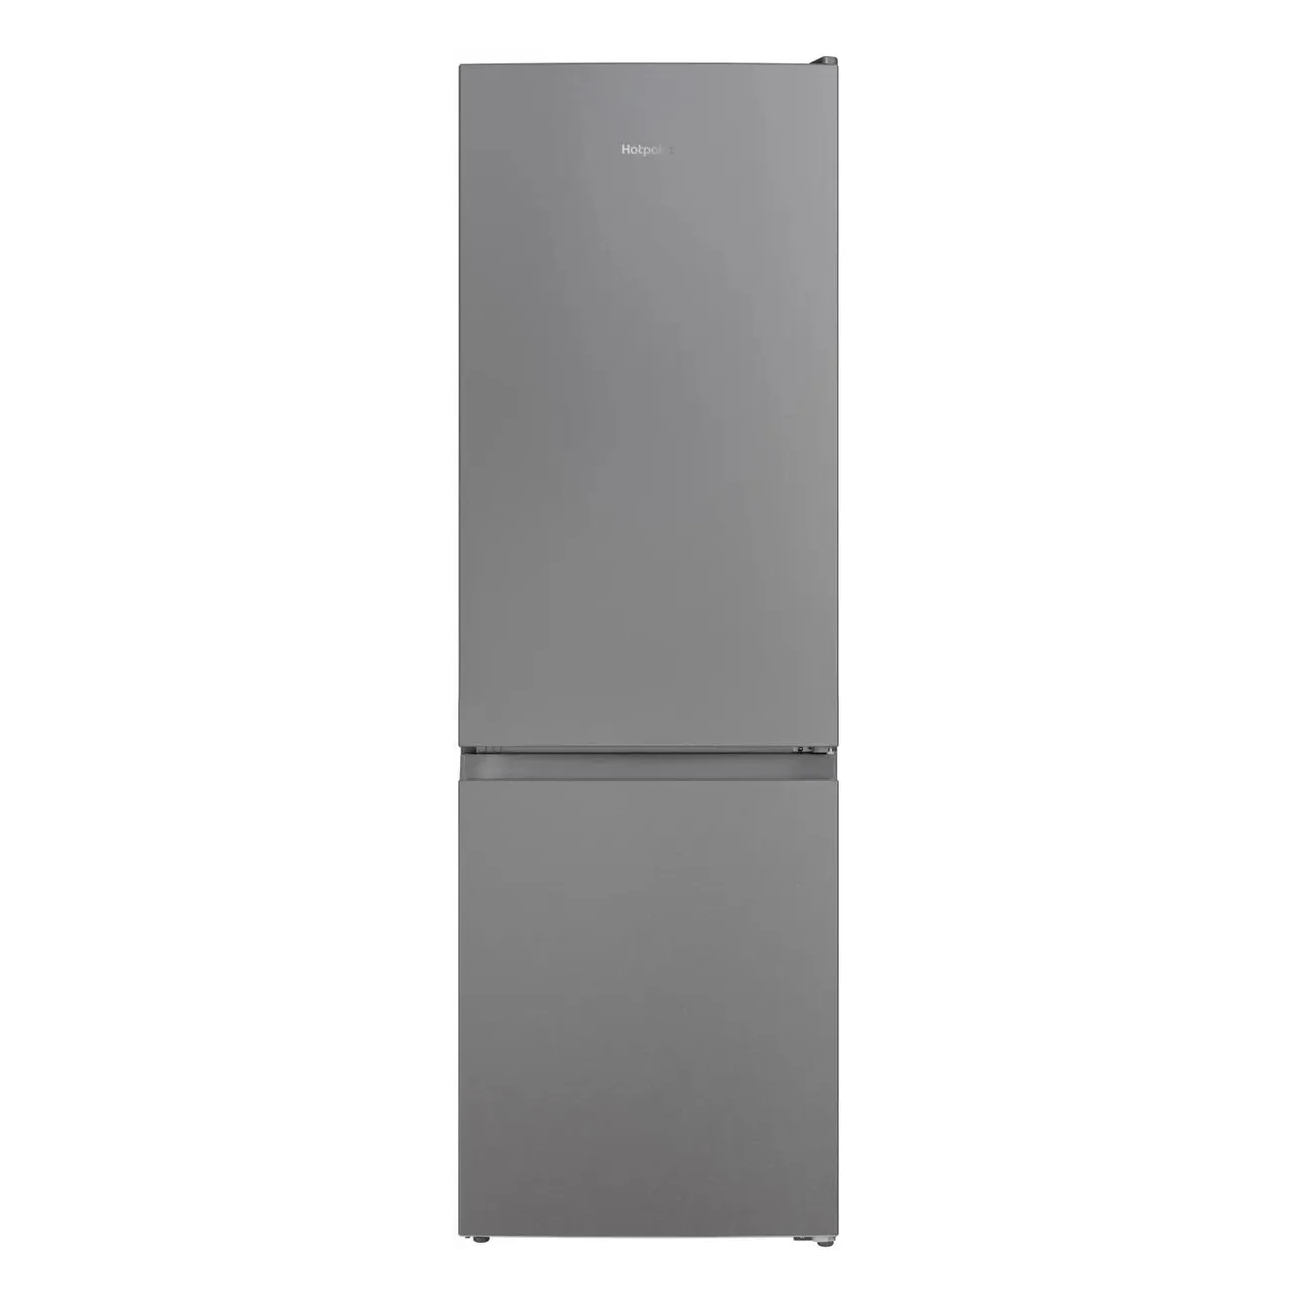 Холодильник HotPoint HT 4180 S серебристый двухкамерный холодильник hotpoint hts 5200 s серебристый